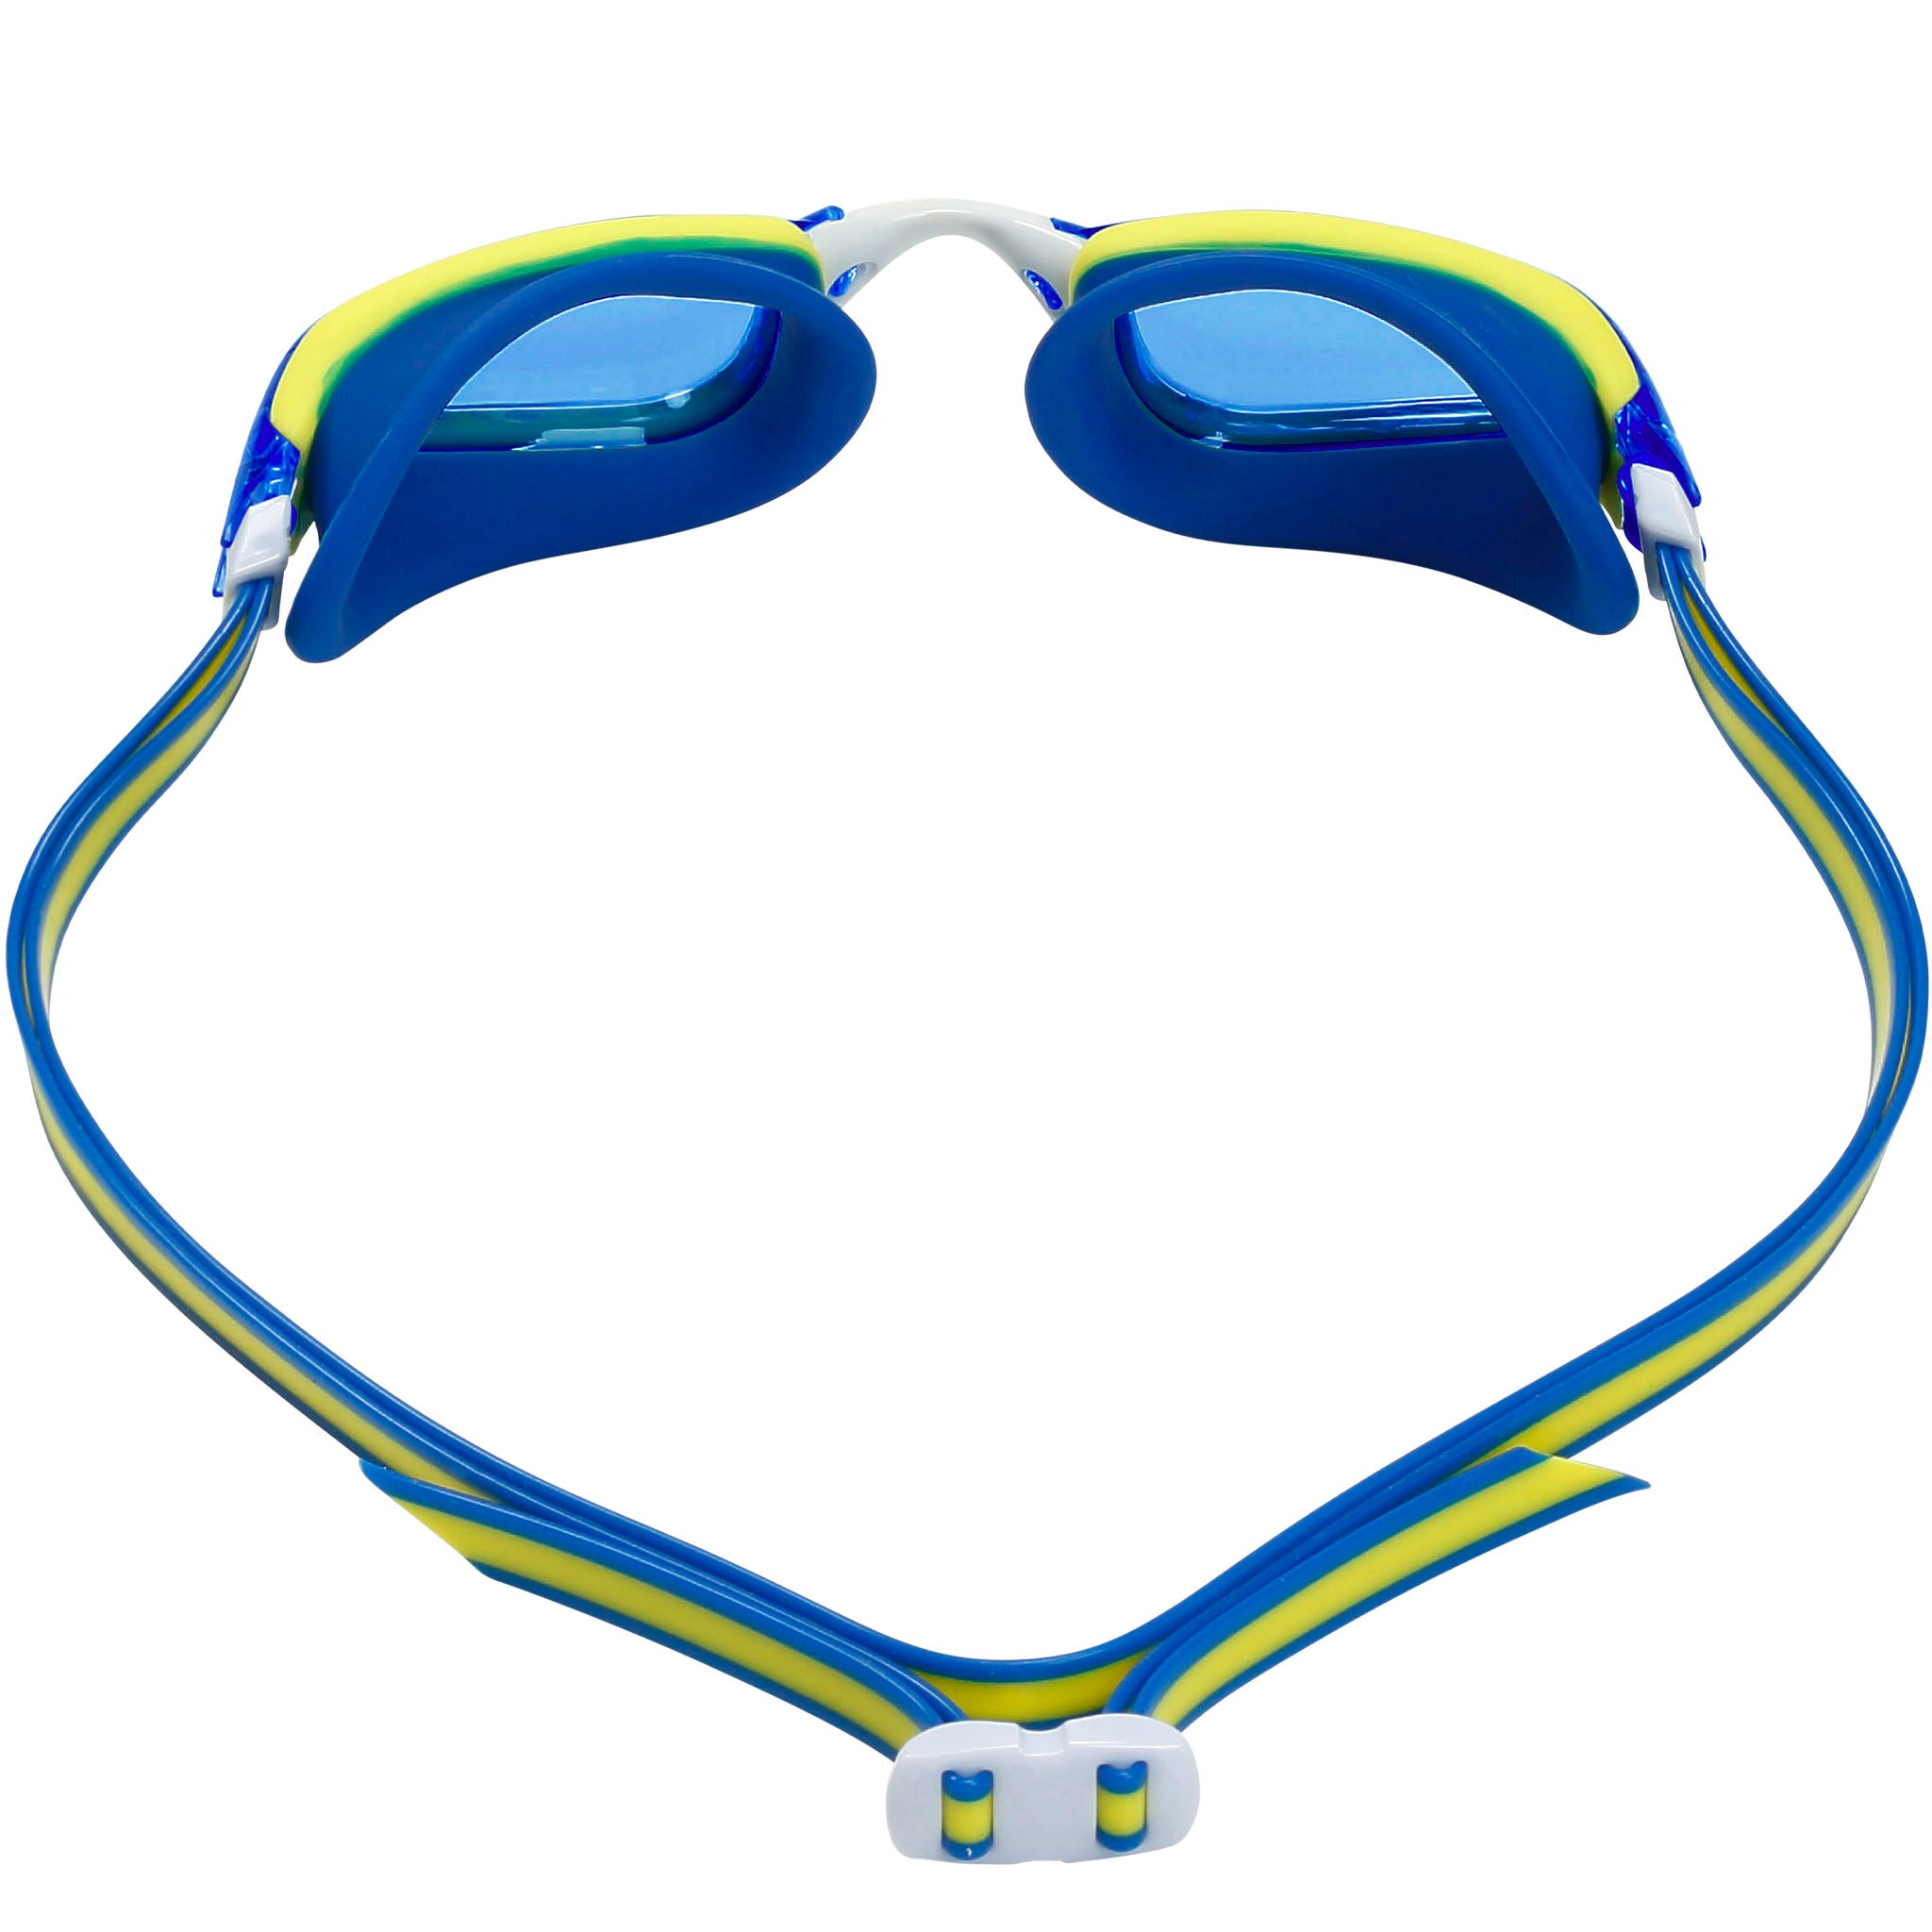 Aquasphere Fastlane Swimming Goggles Blue Tinted Lenses - Inside view